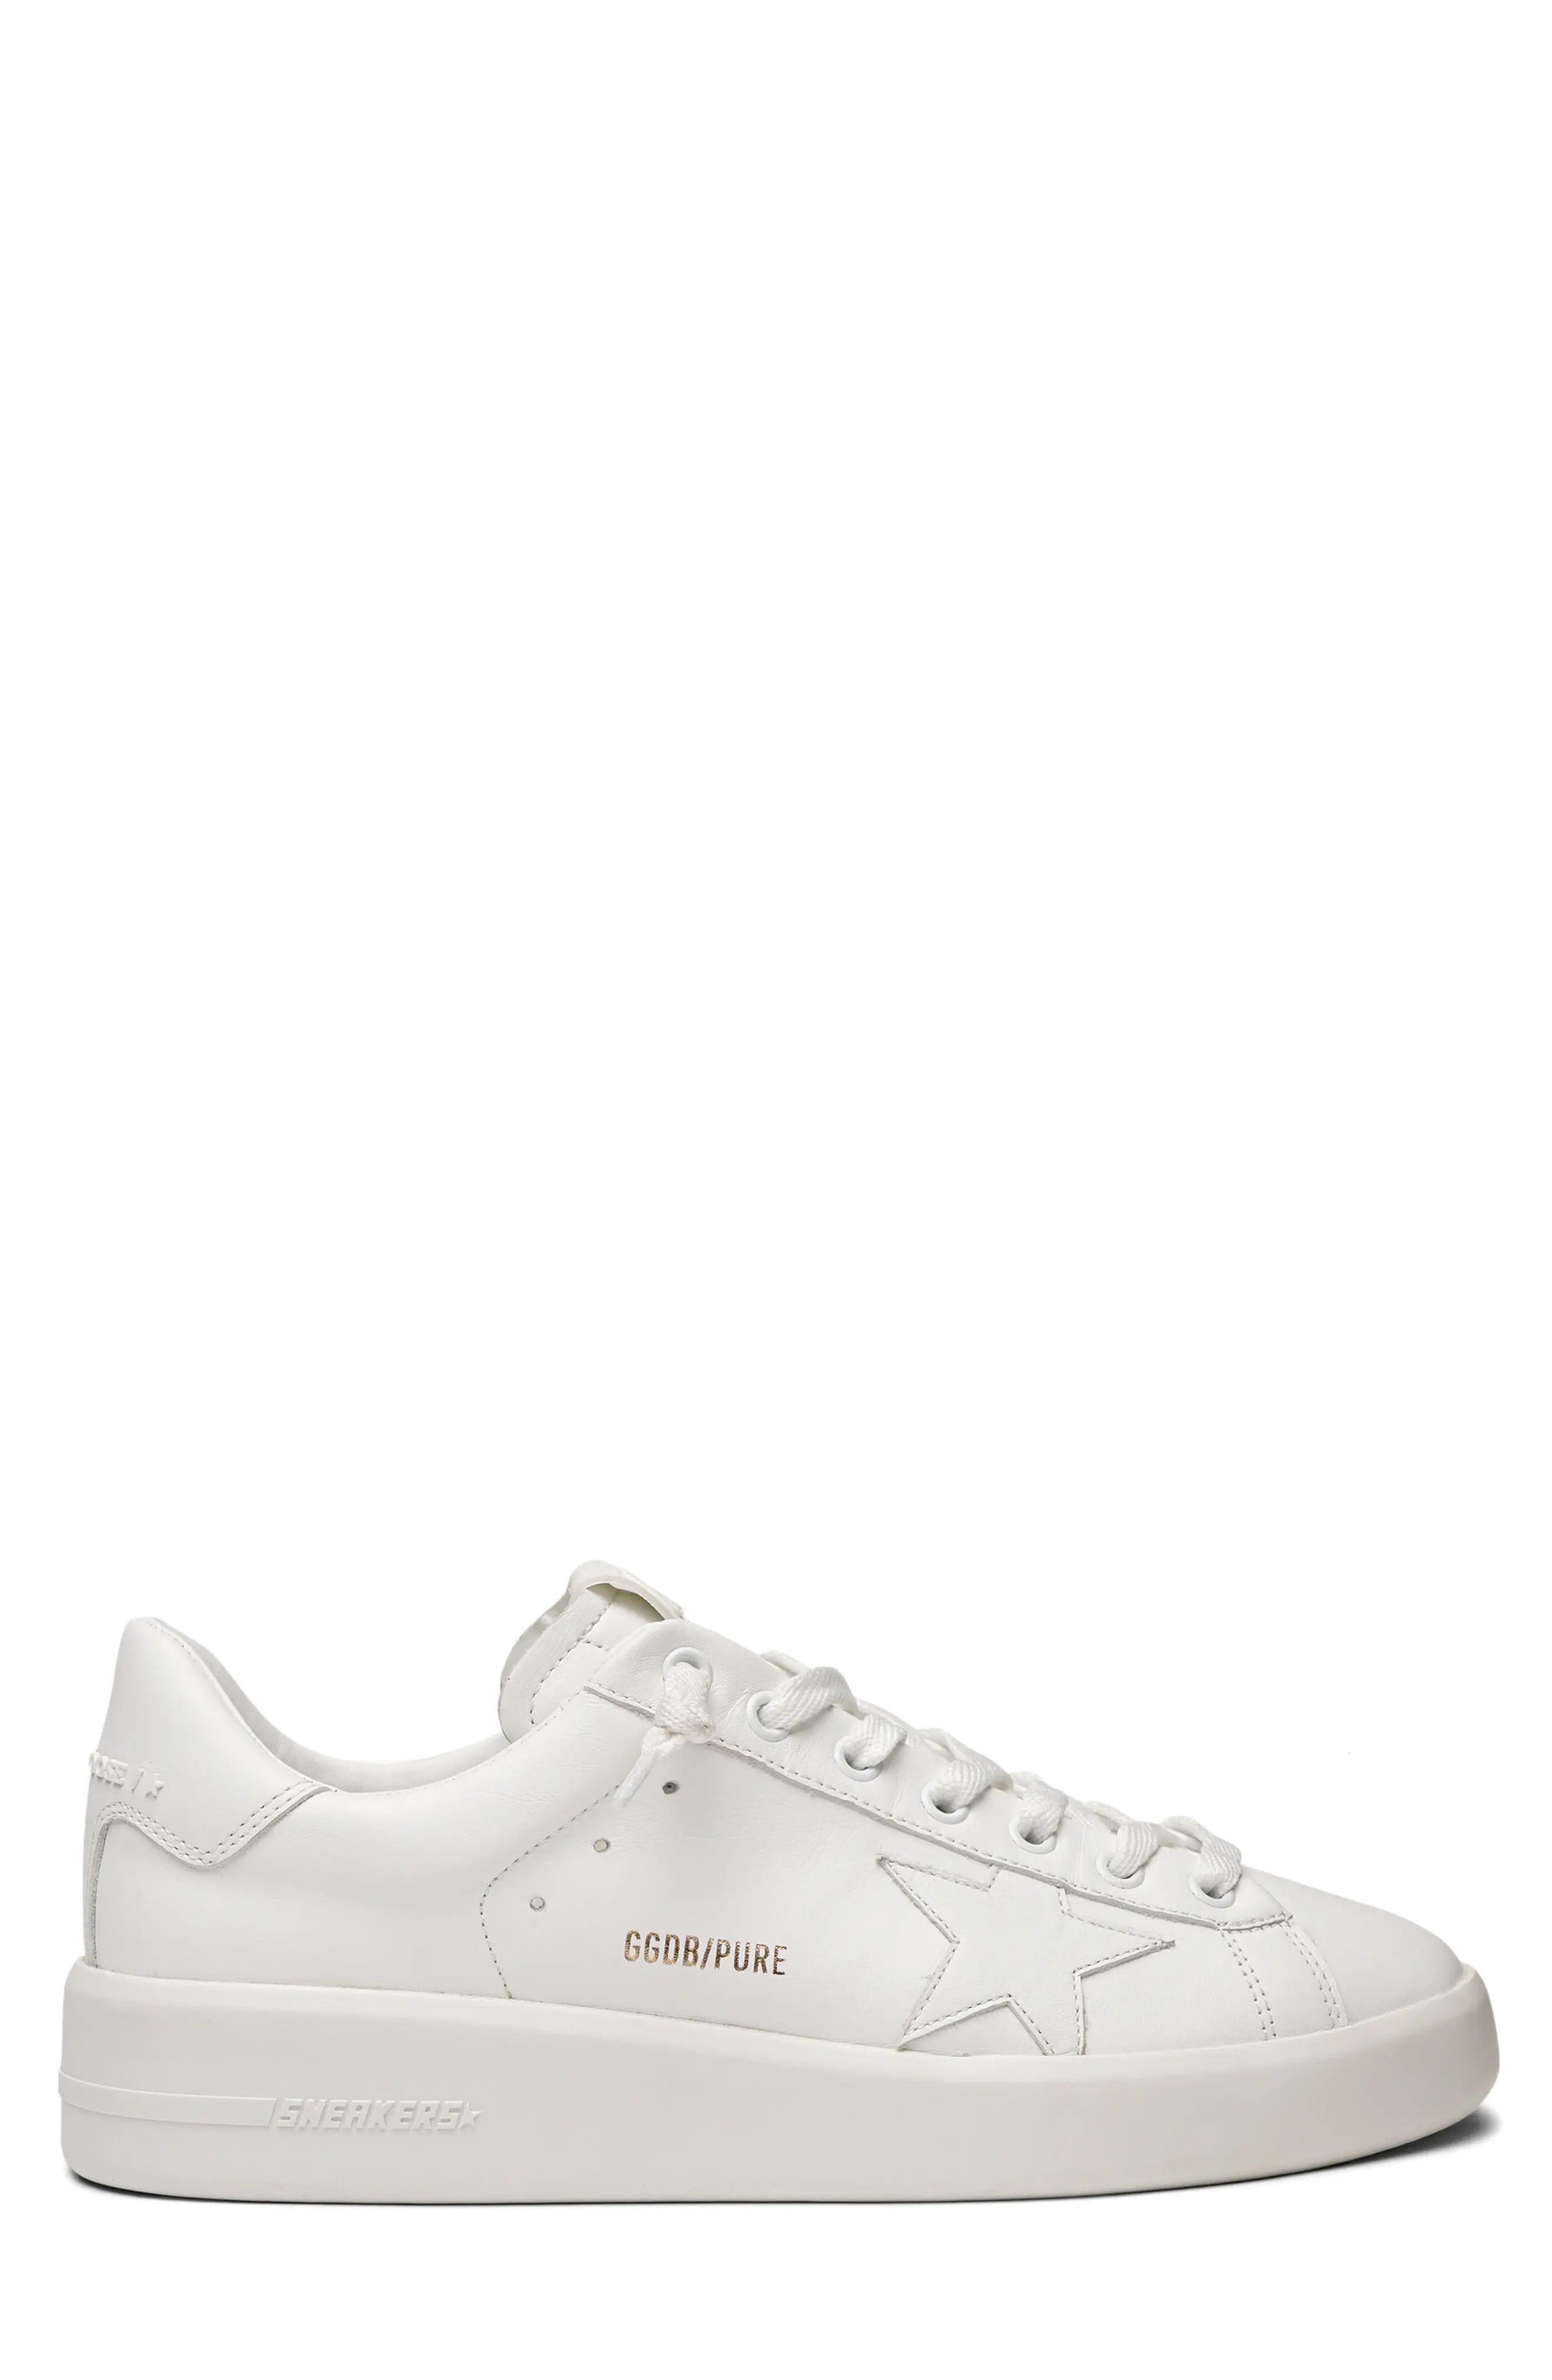 Women's Golden Goose Purestar Low Top Sneaker, Size 6US - White | Nordstrom